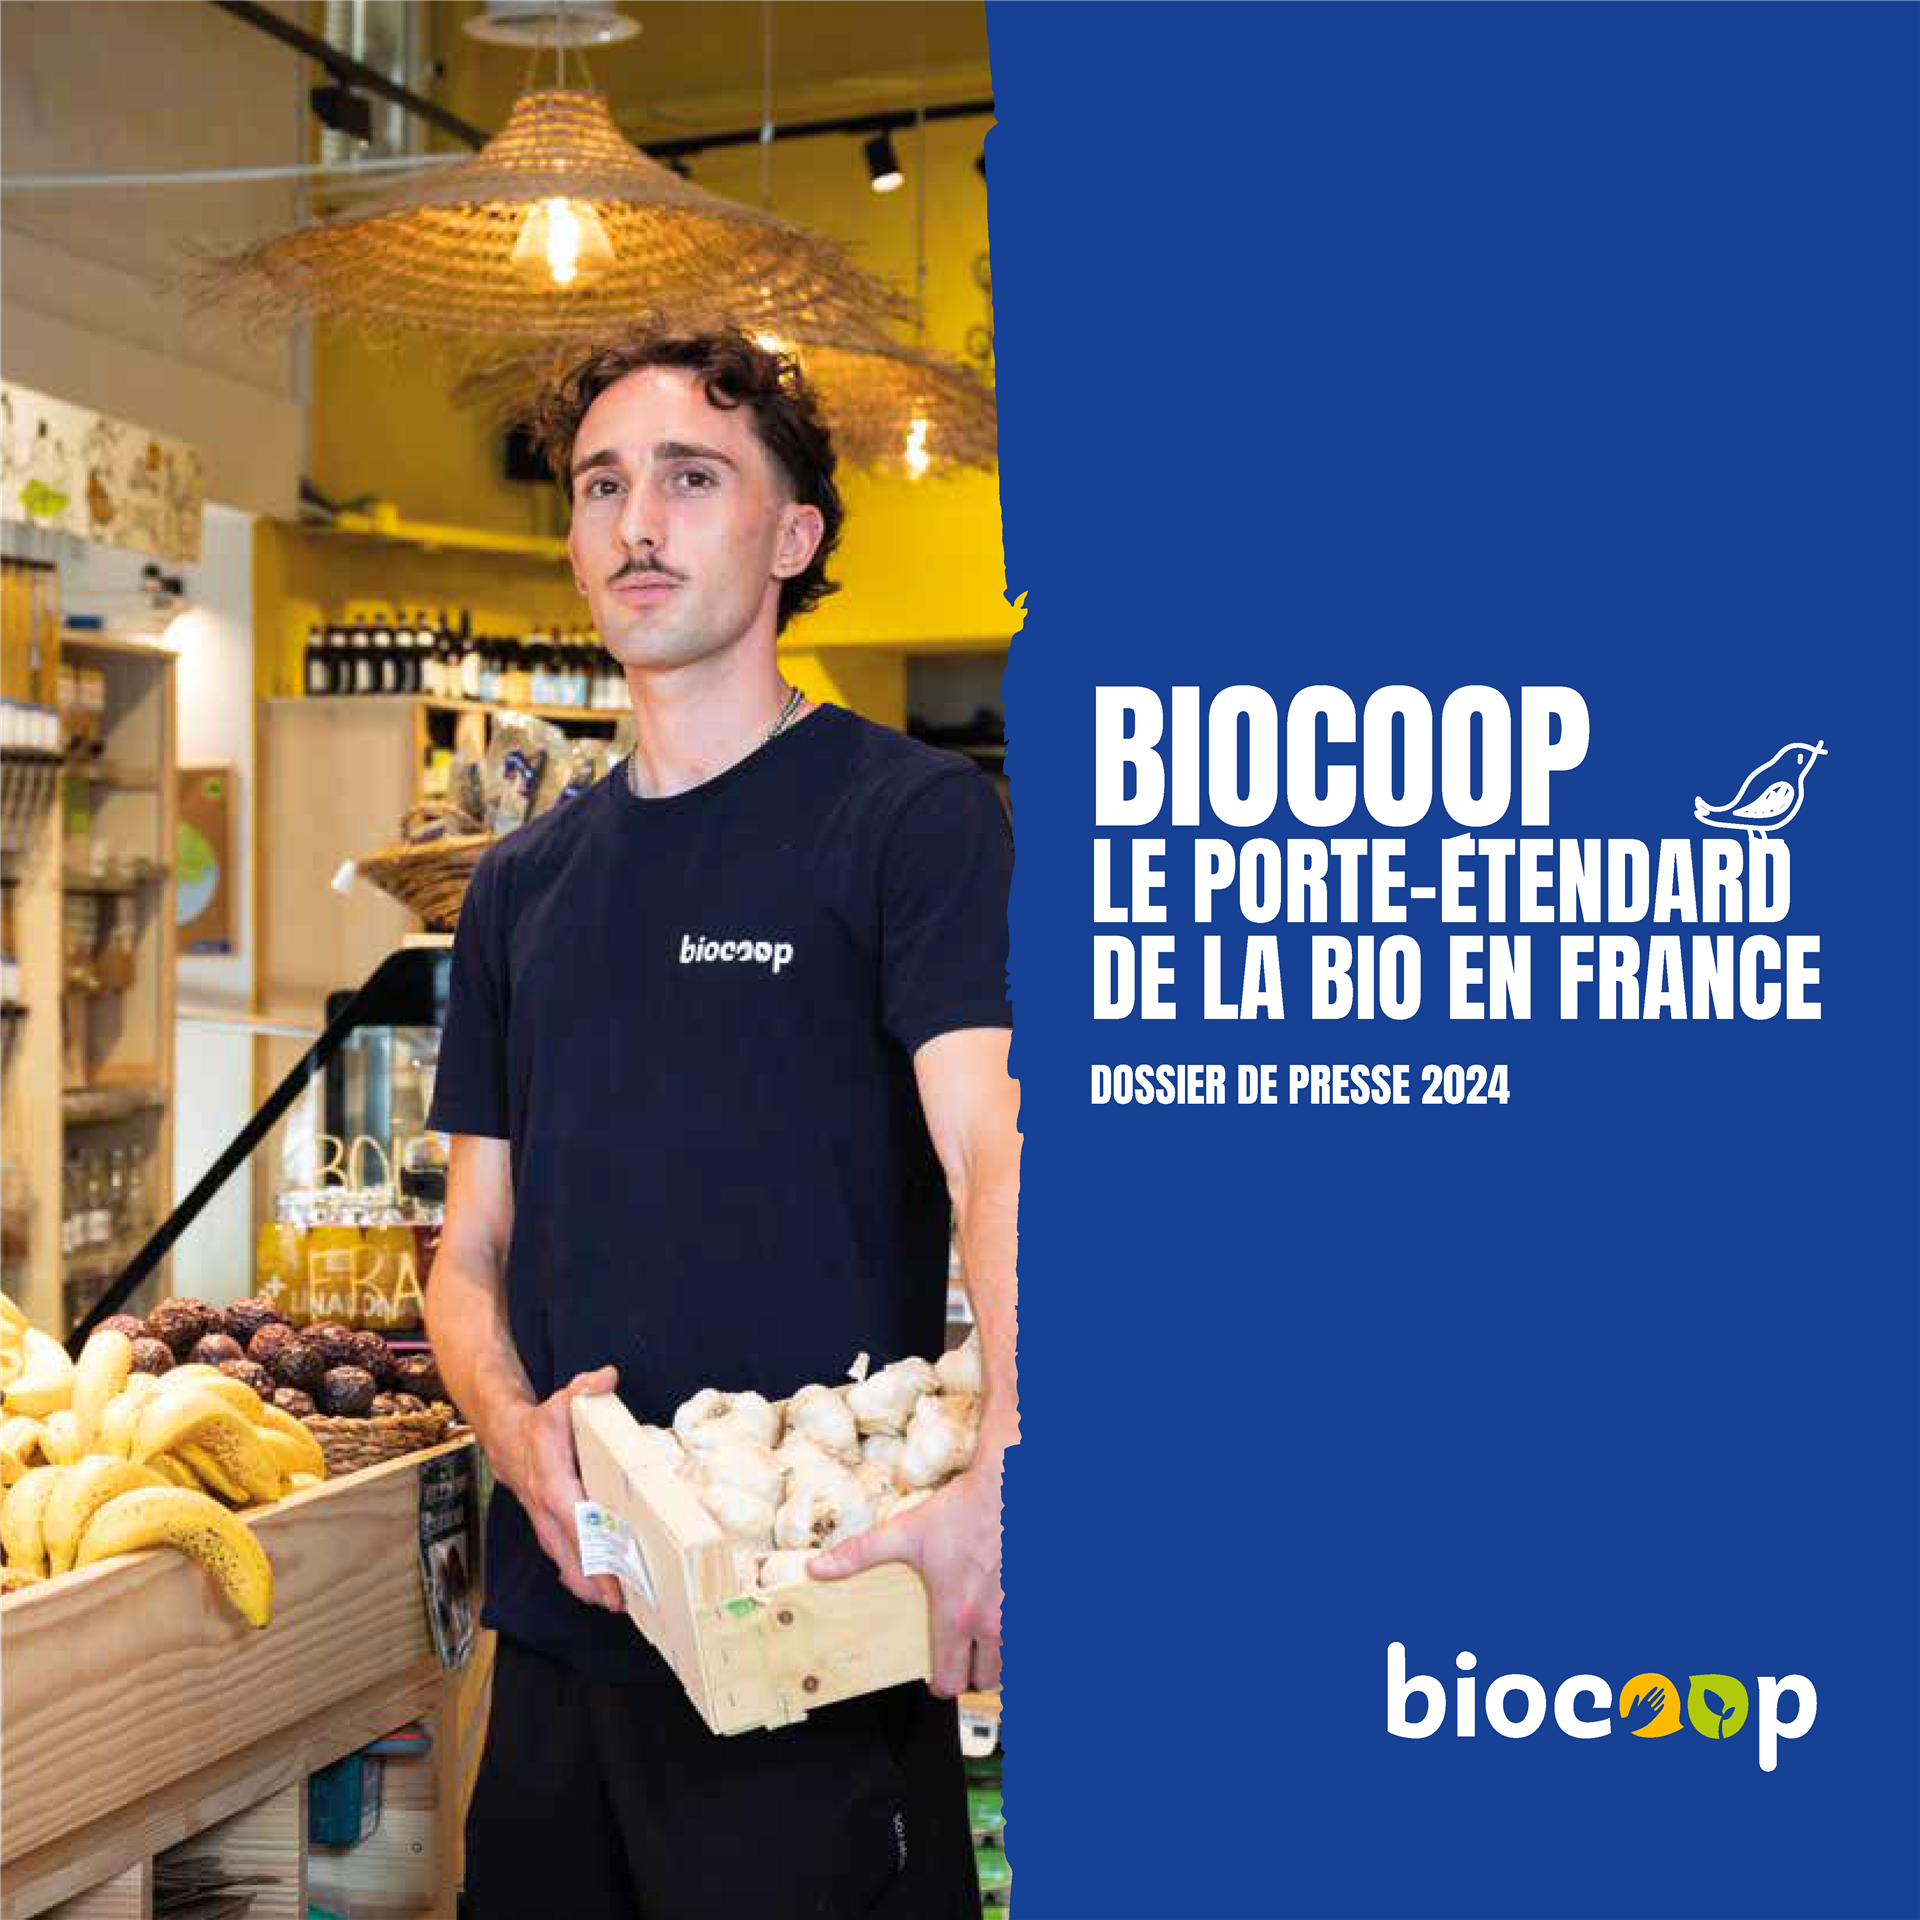 Biocoop, le porte-étendard de la bio en france